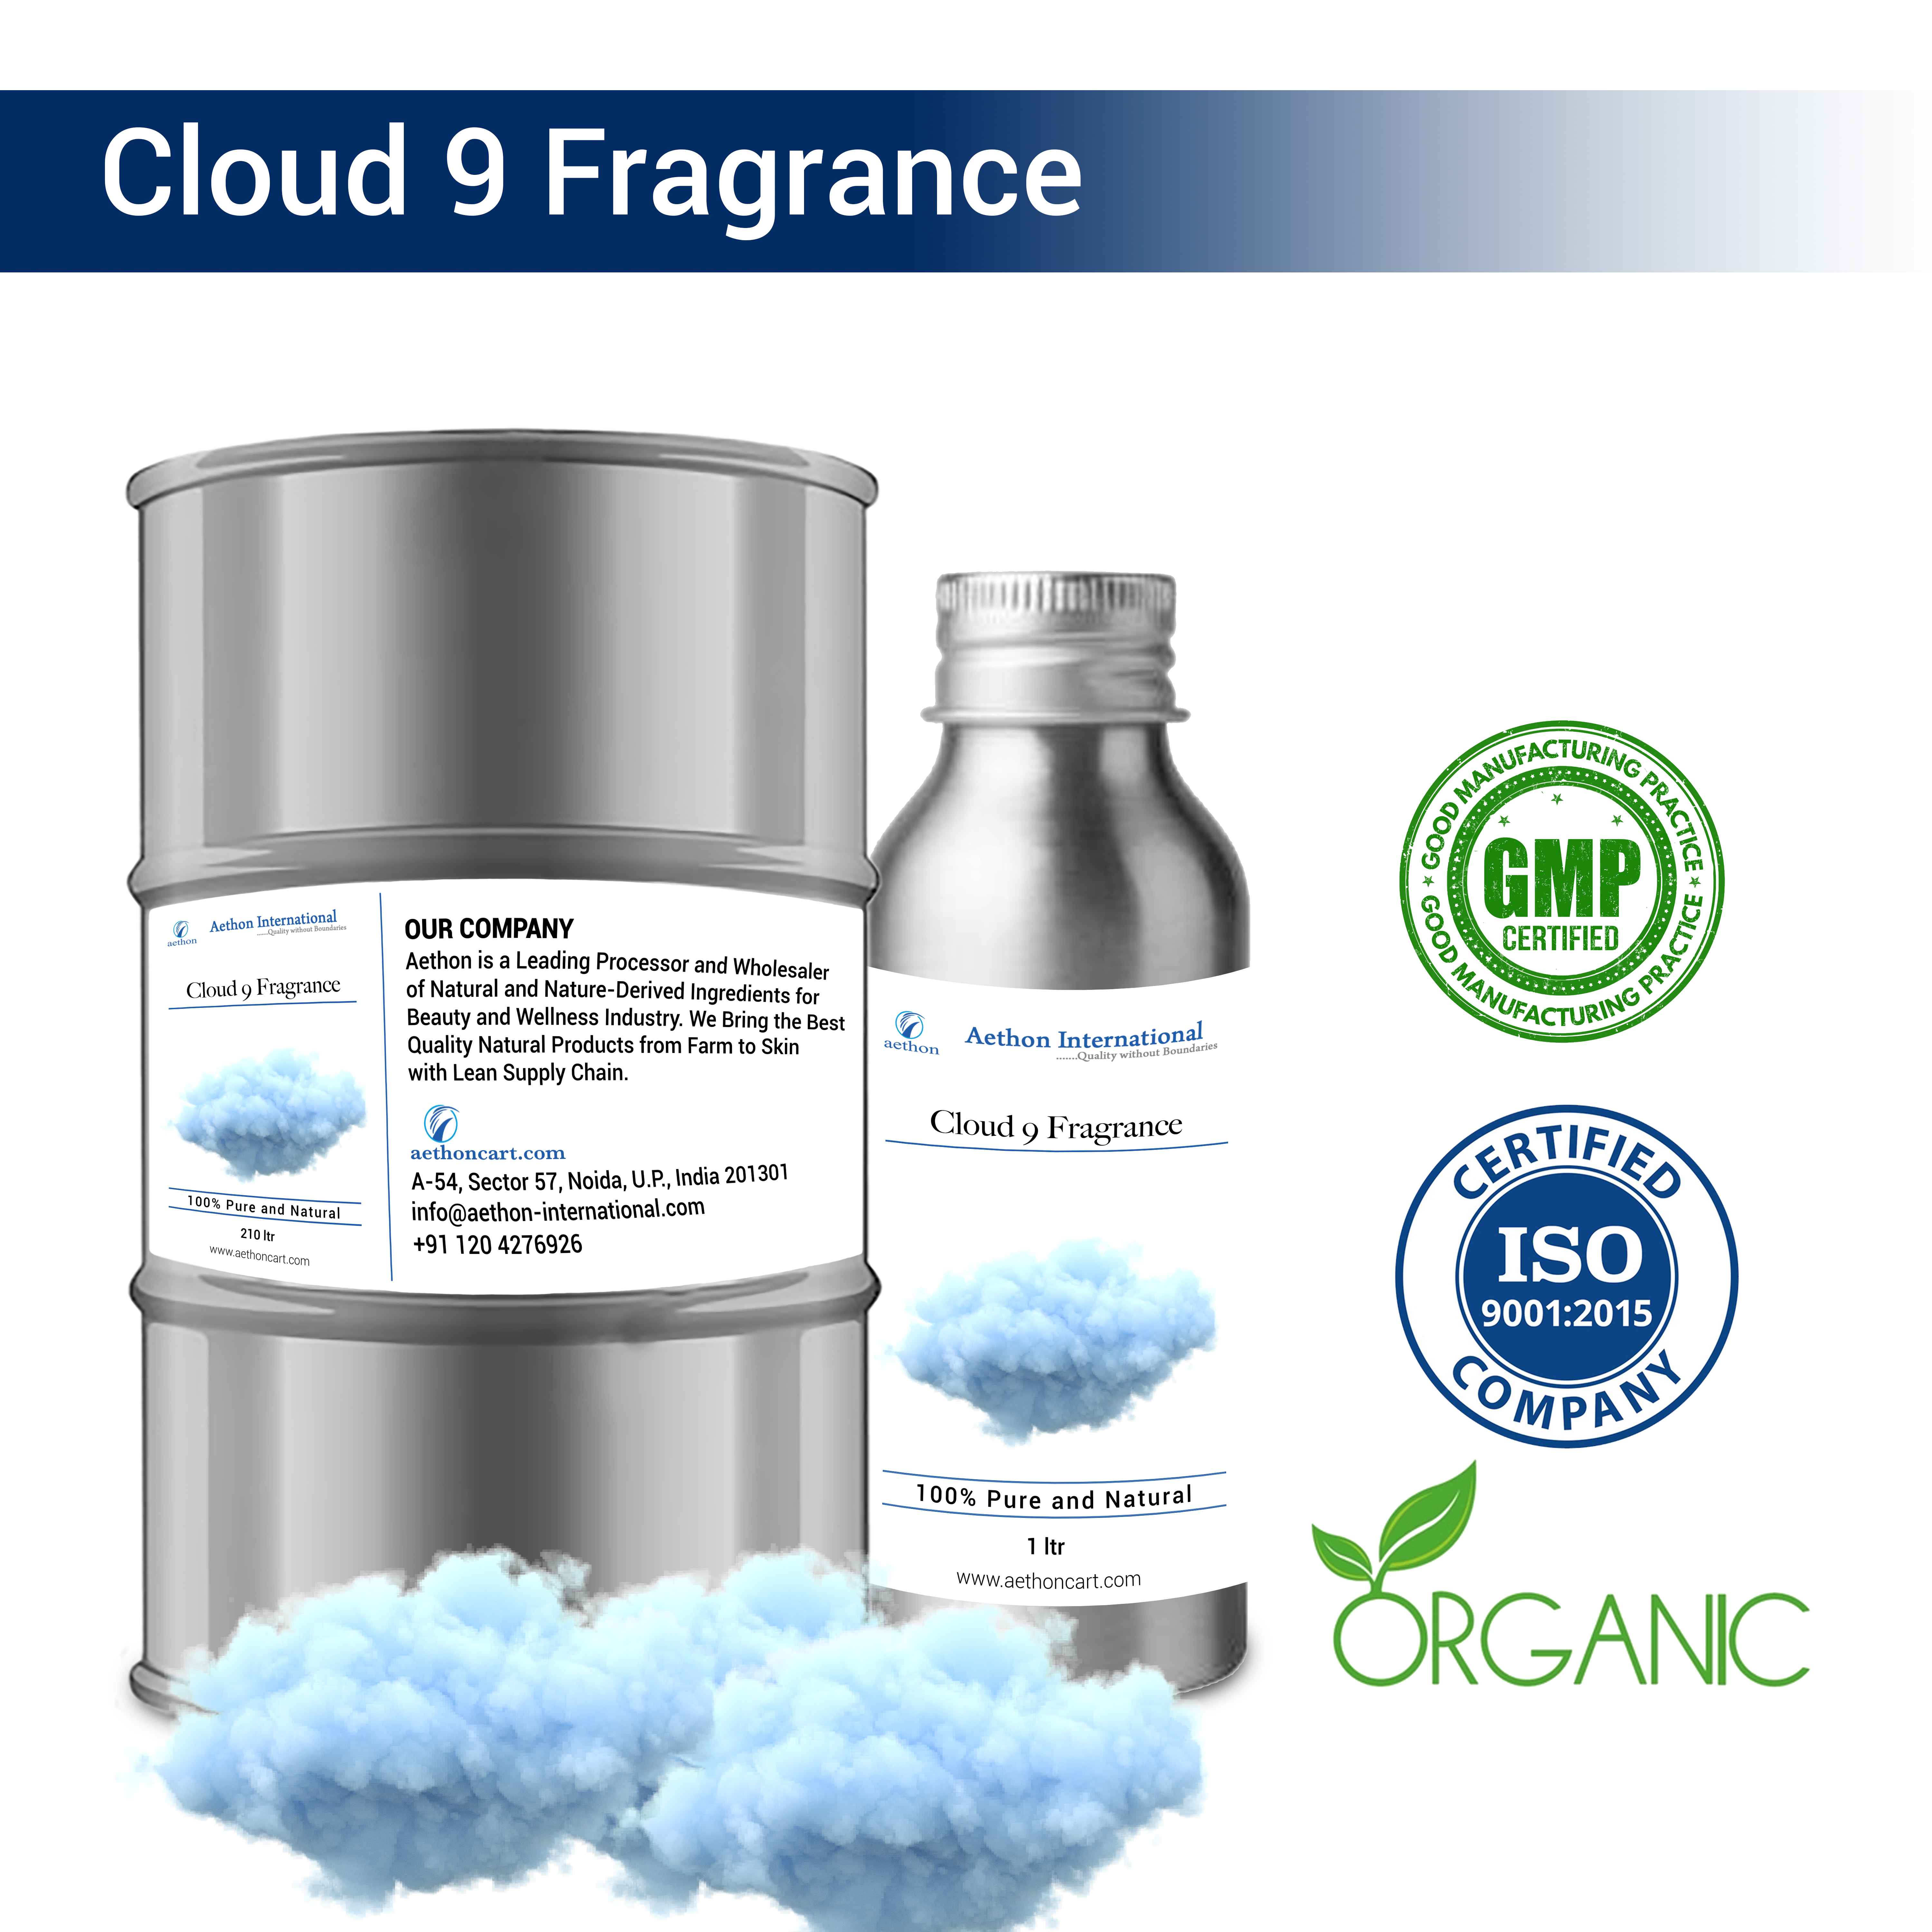 Cloud 9 Fragrance